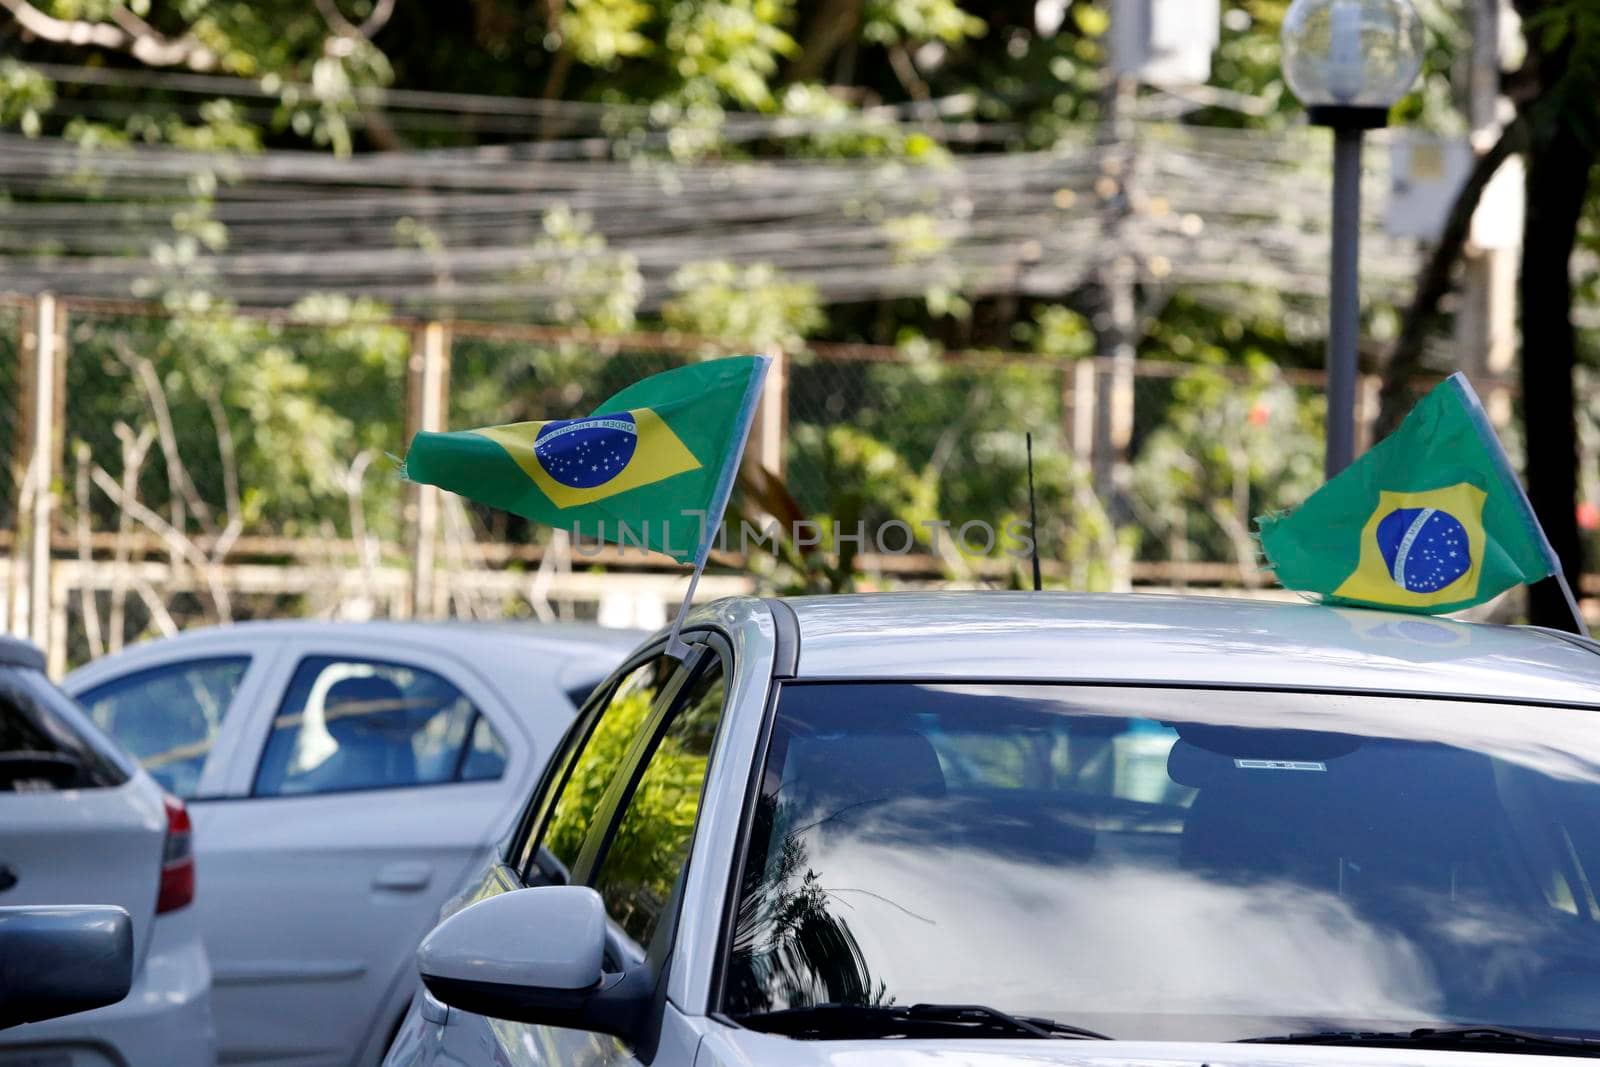 salvador, bahia / brazil  - June 16, 2018: Brazilian flags are seen in the city of Salvador.
